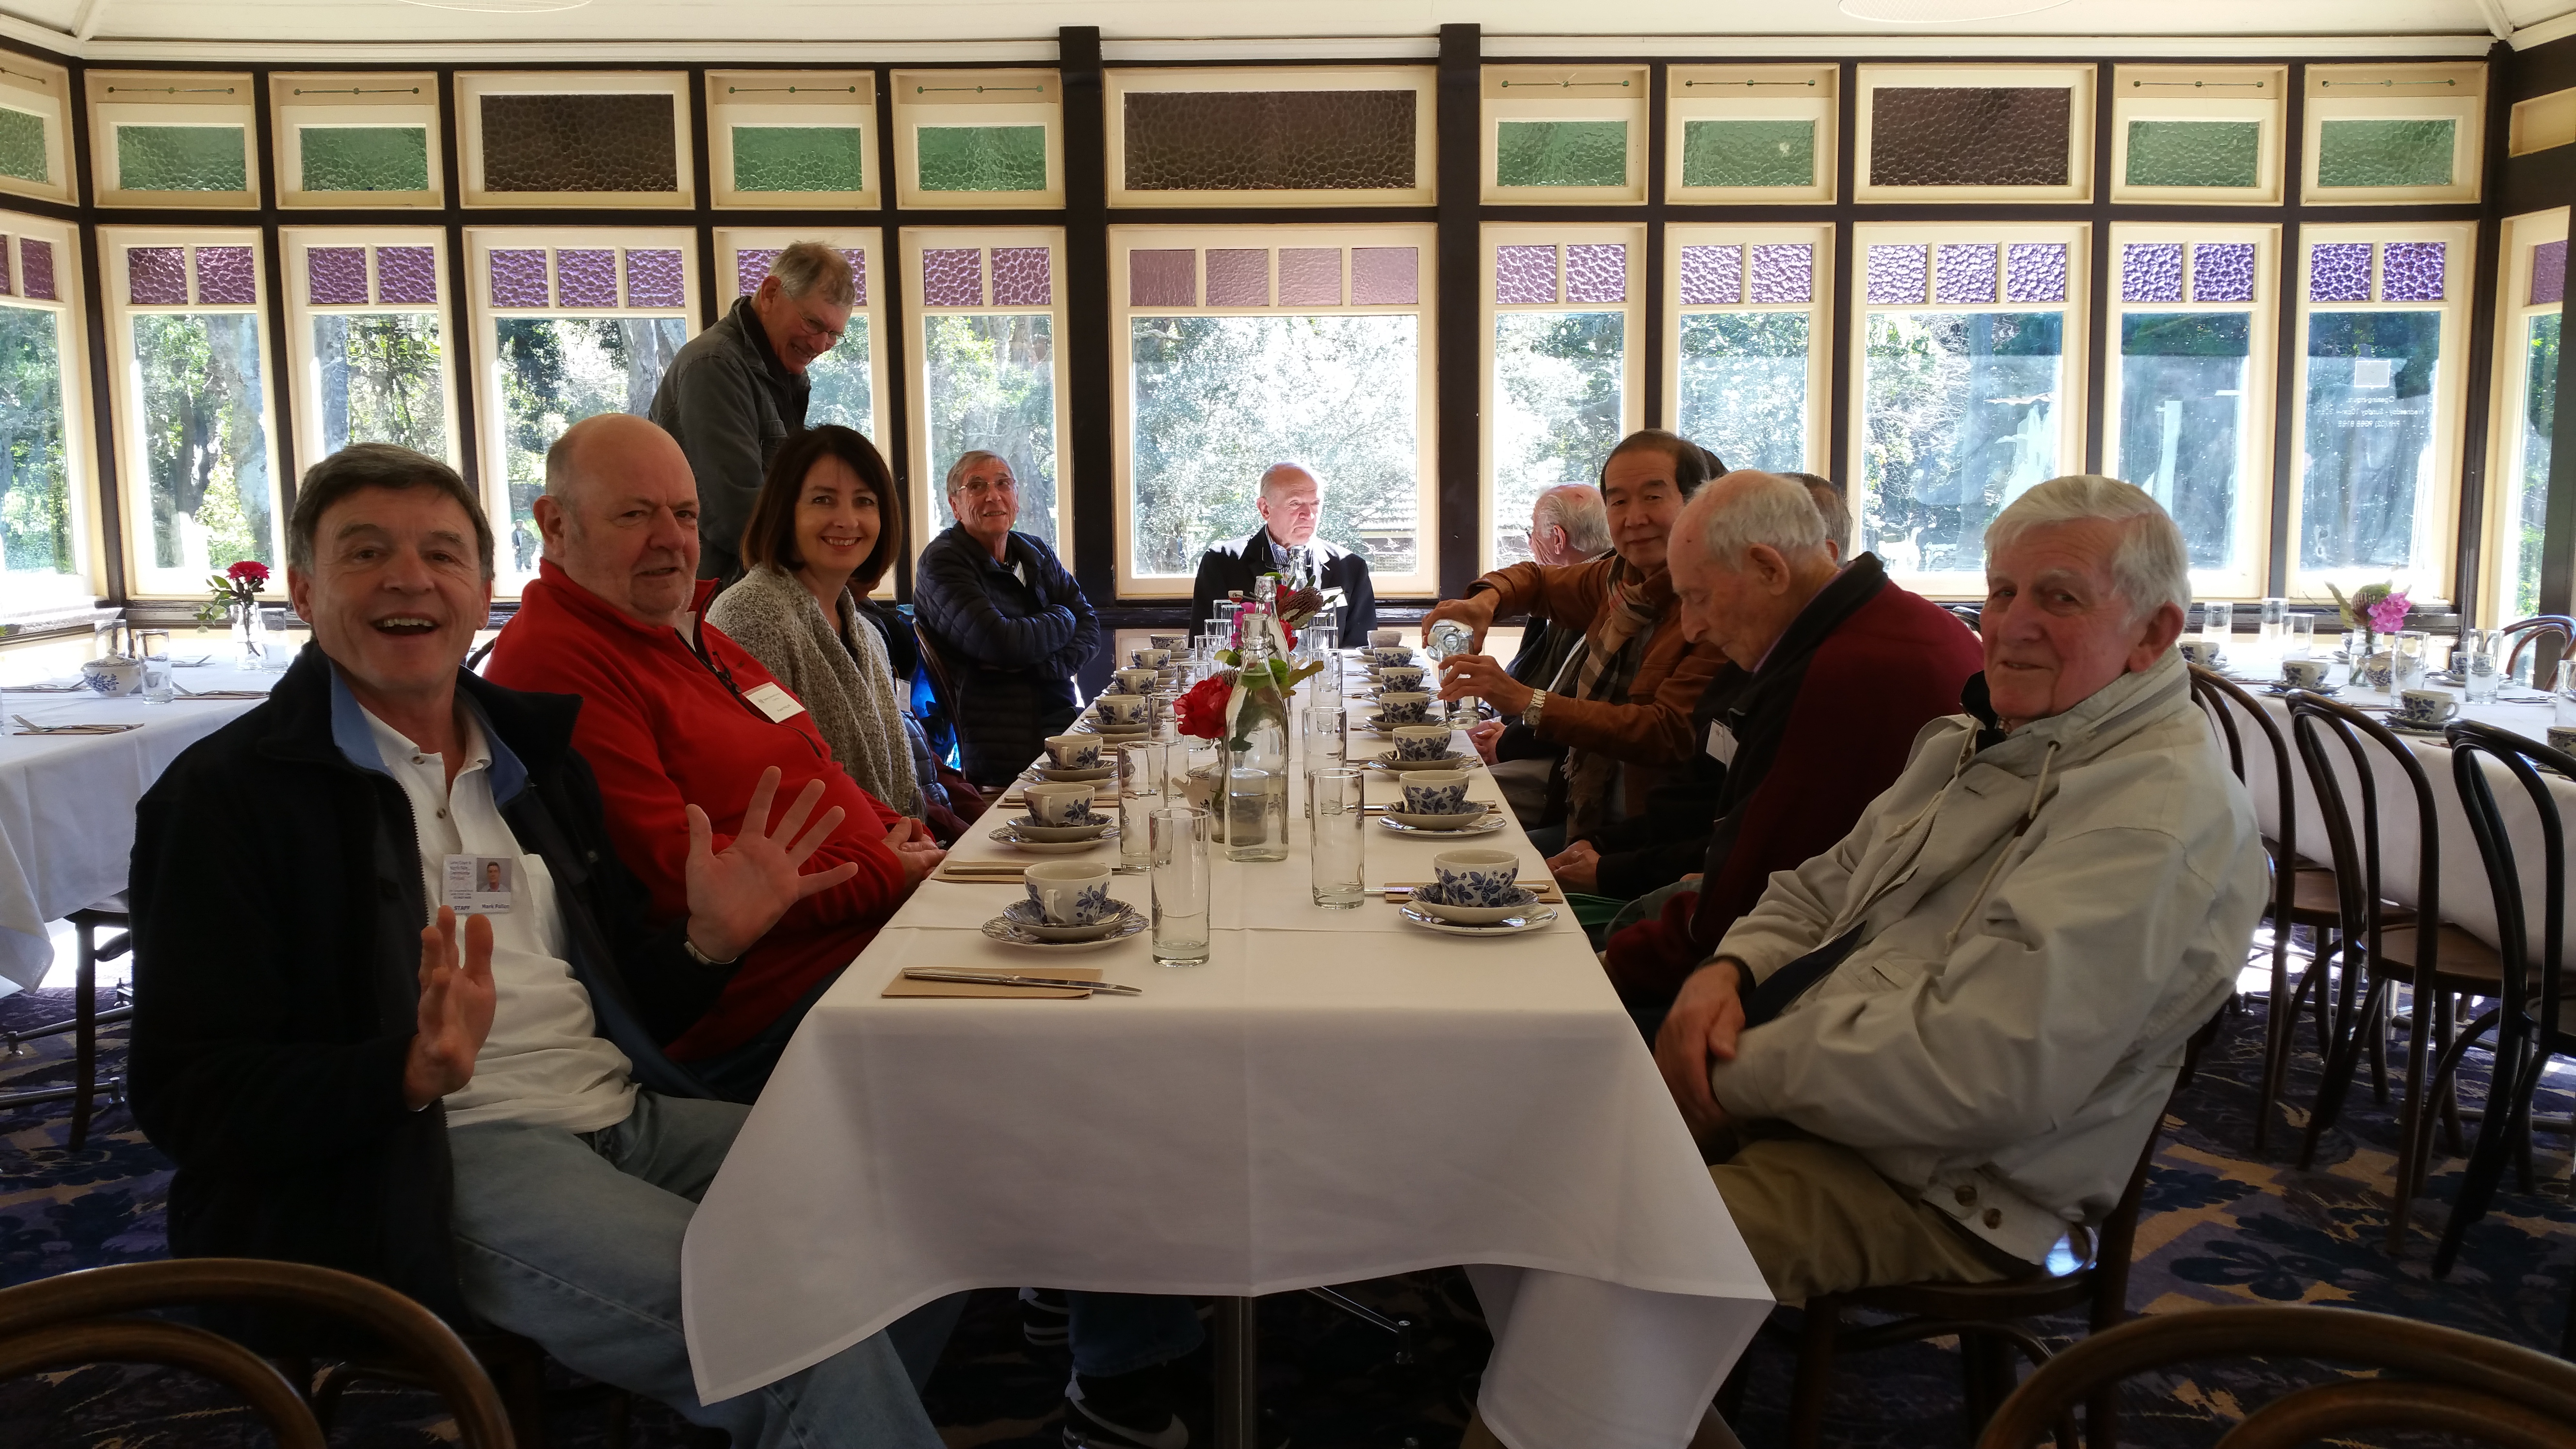 A group of old men at restaurant